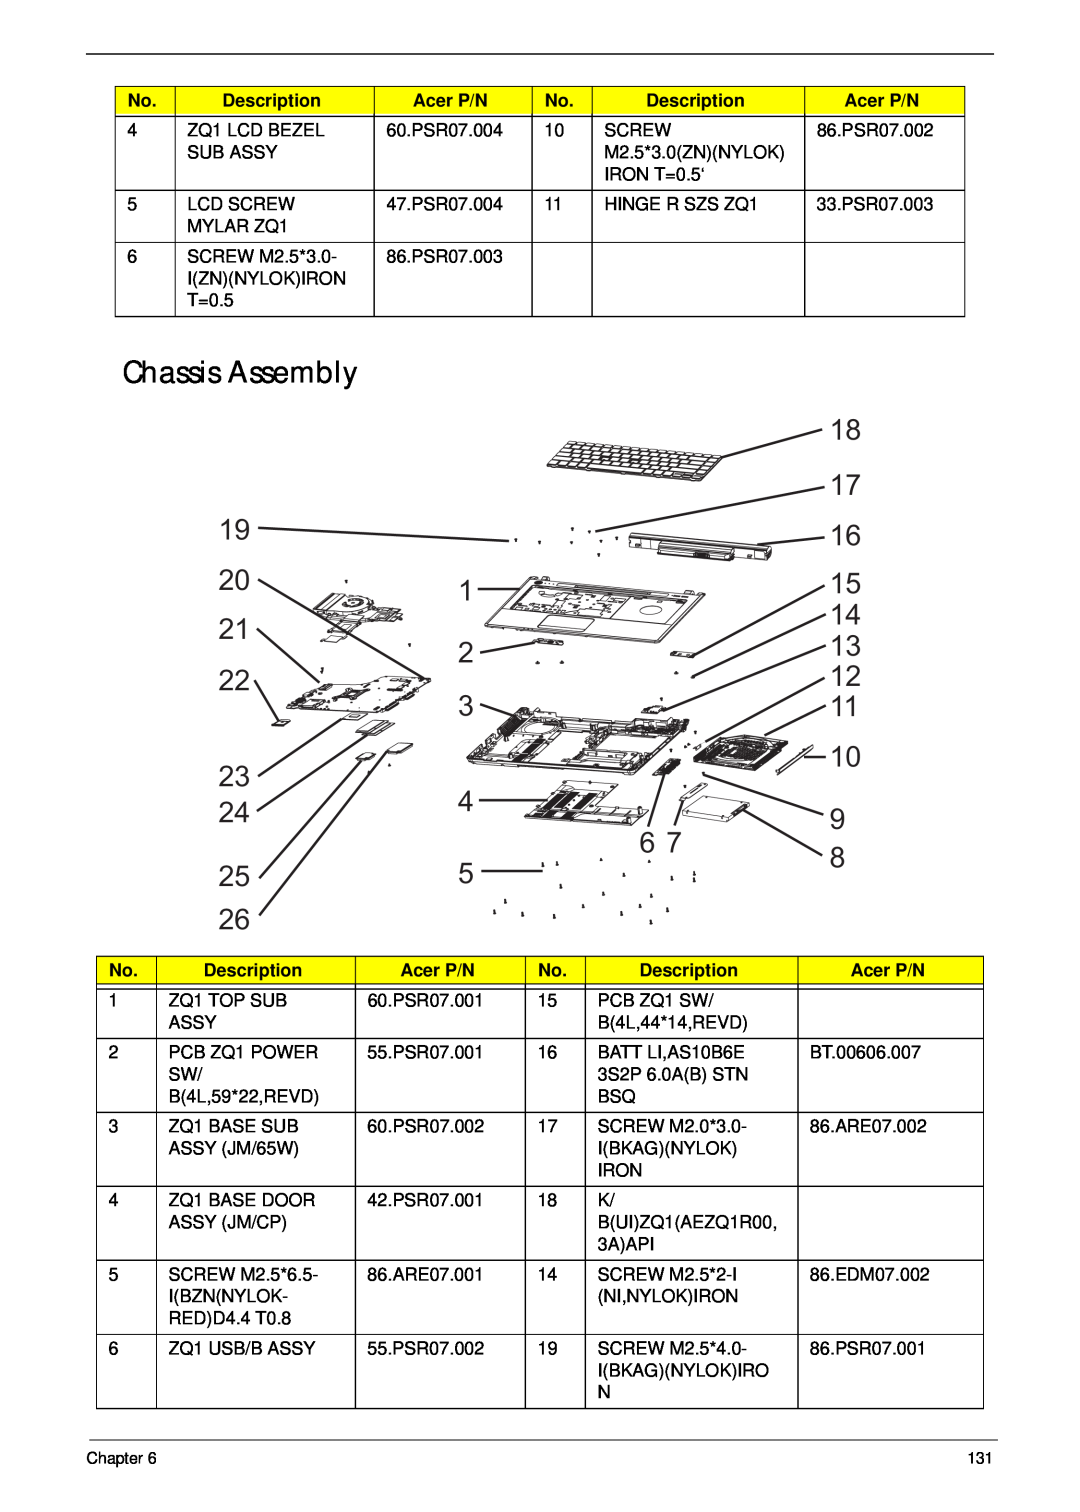 Aspire Digital 4625G manual Chassis Assembly, Description, Acer P/N 